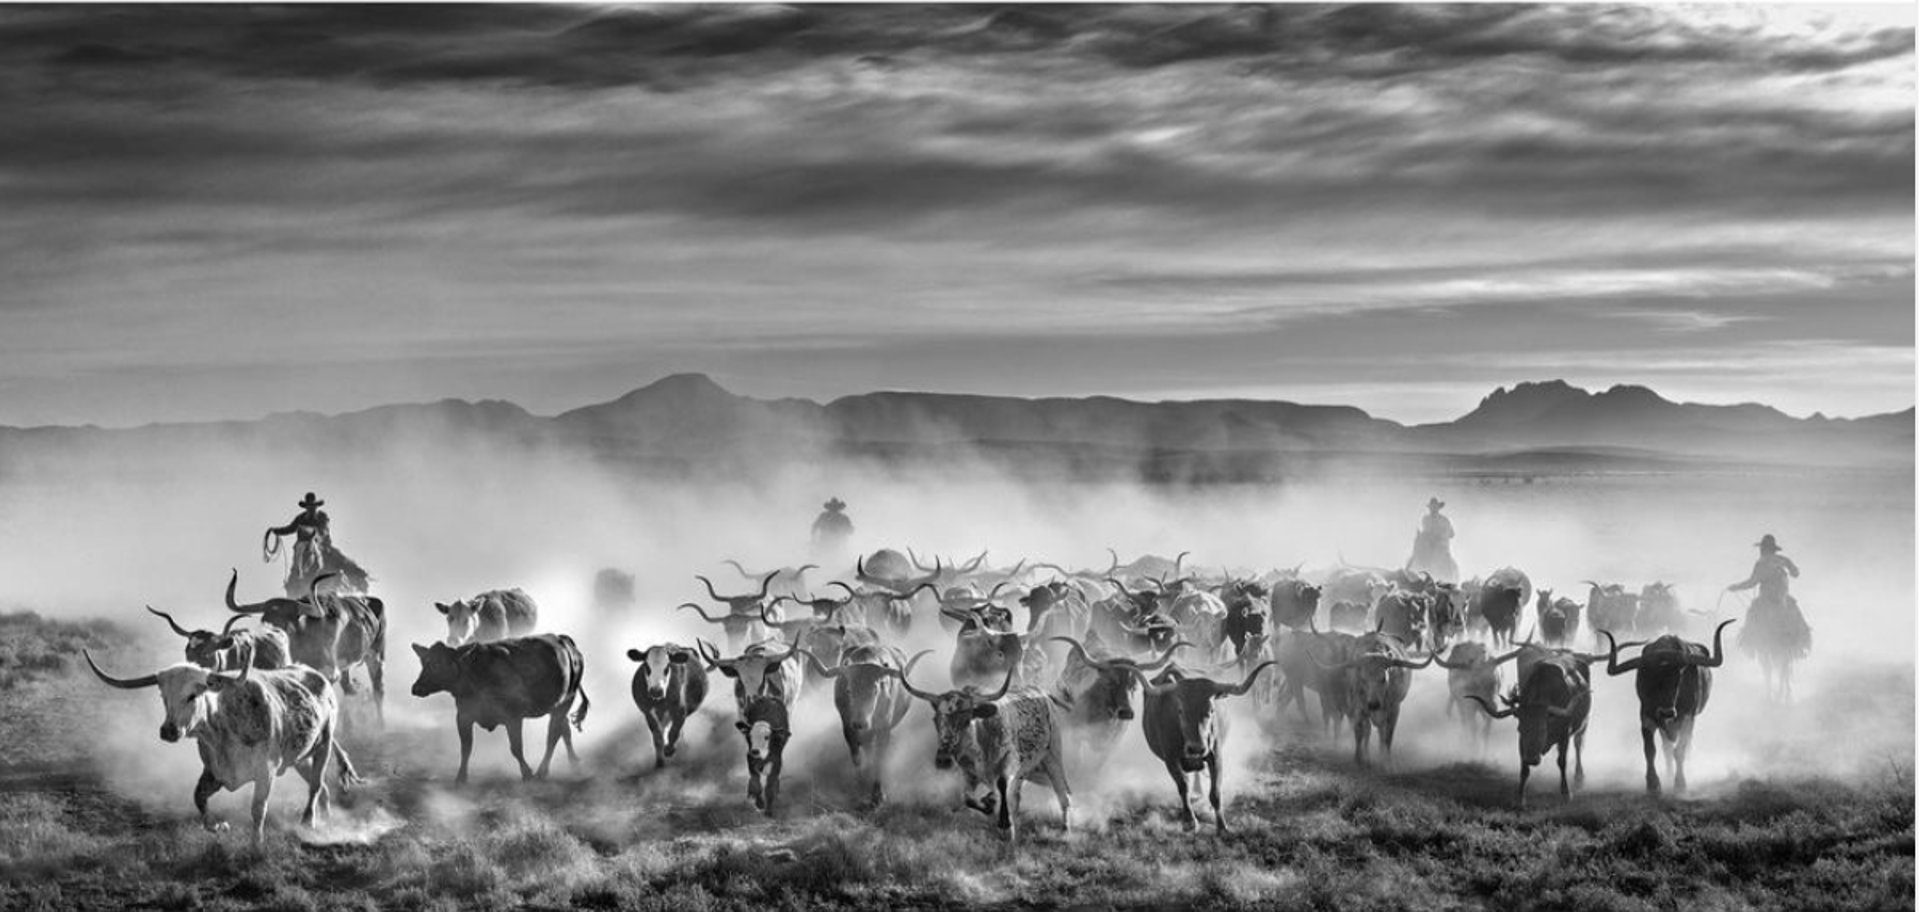 The Thundering Herd by David Yarrow